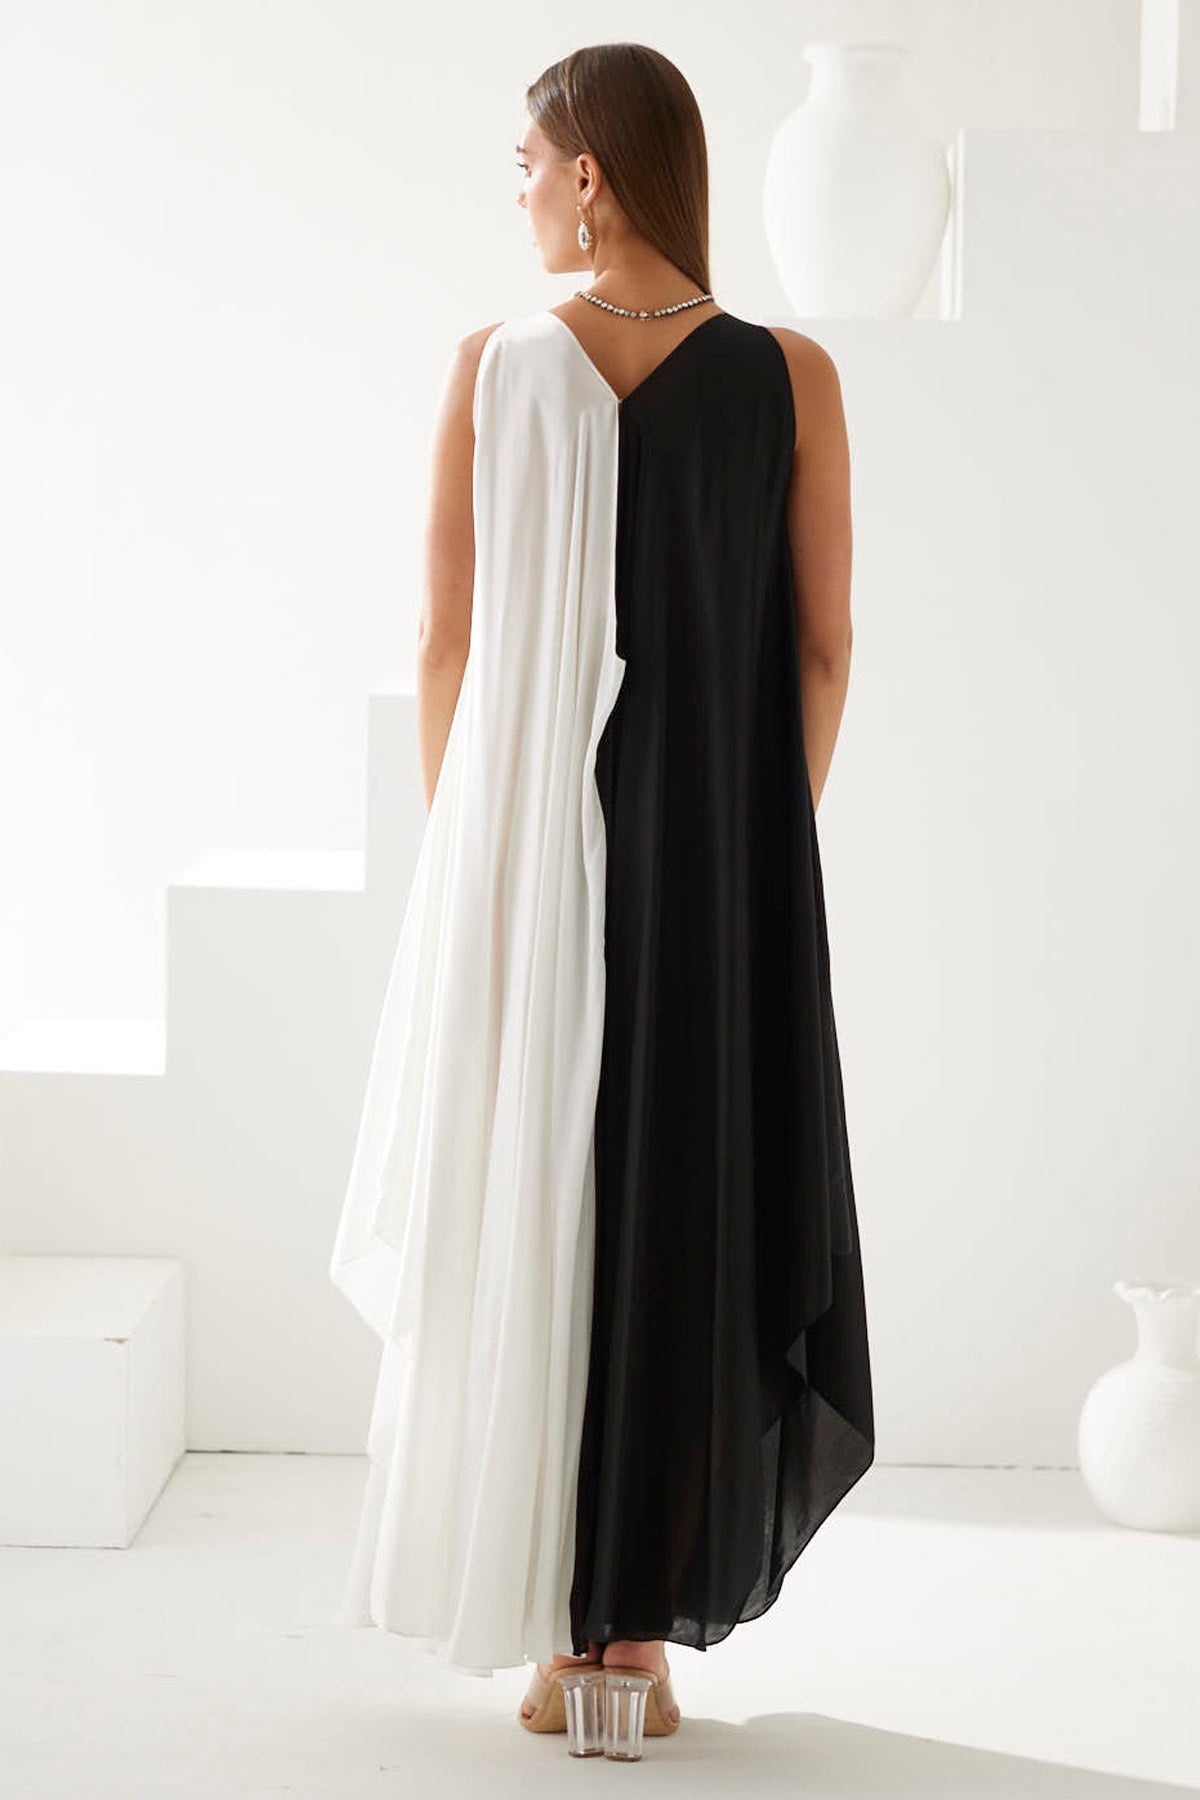 Black & White Colorblock Dress